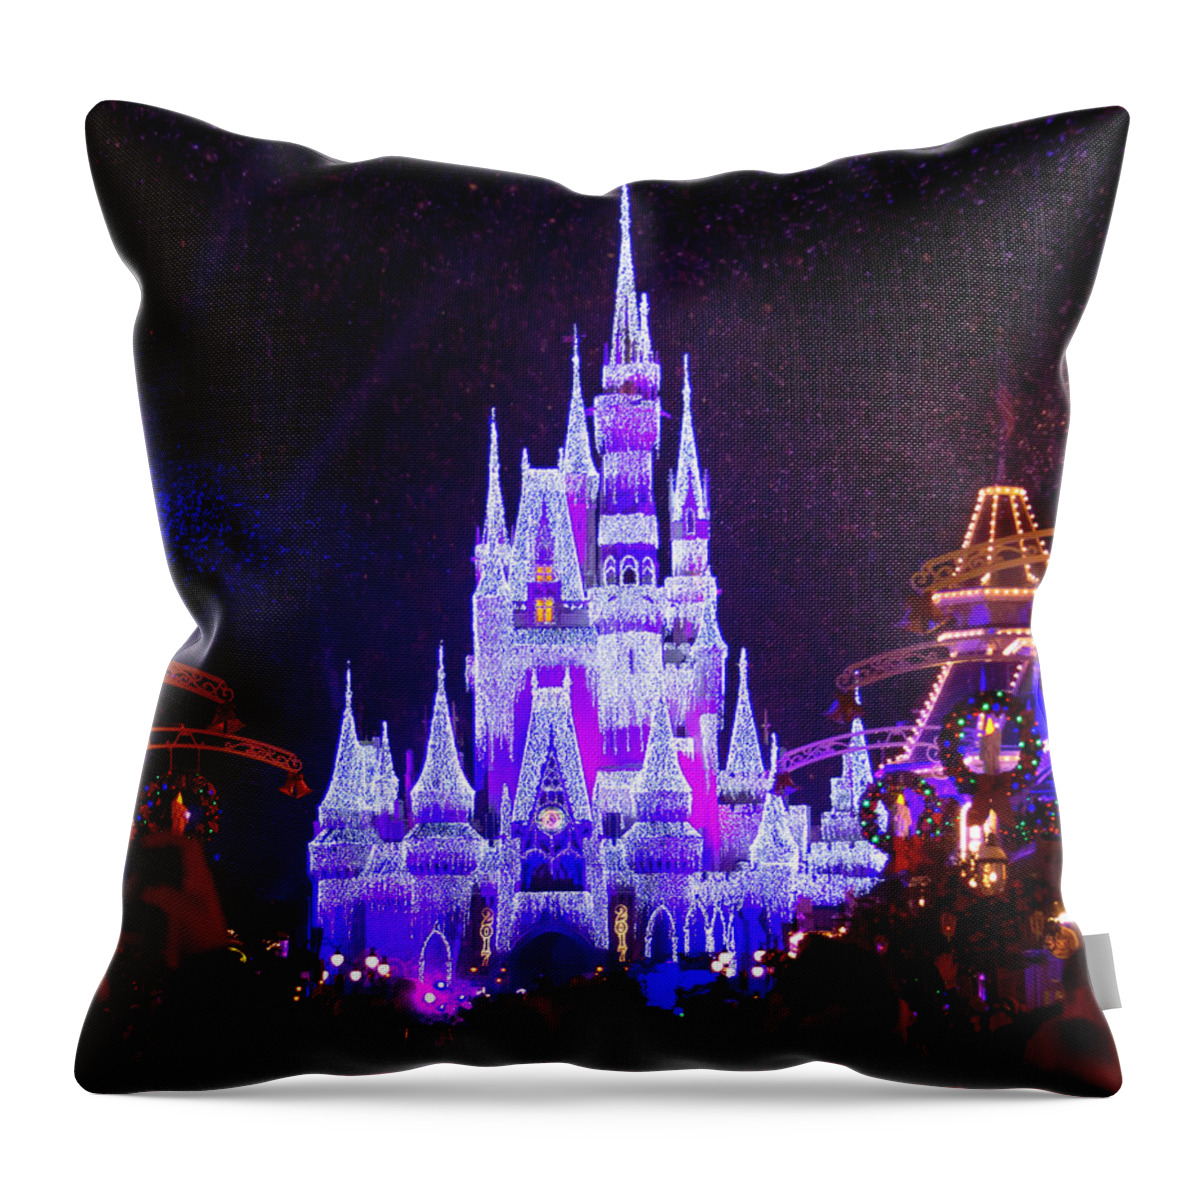 Magic Kingdom Throw Pillow featuring the photograph A Magic Kingdom Christmas by Mark Andrew Thomas